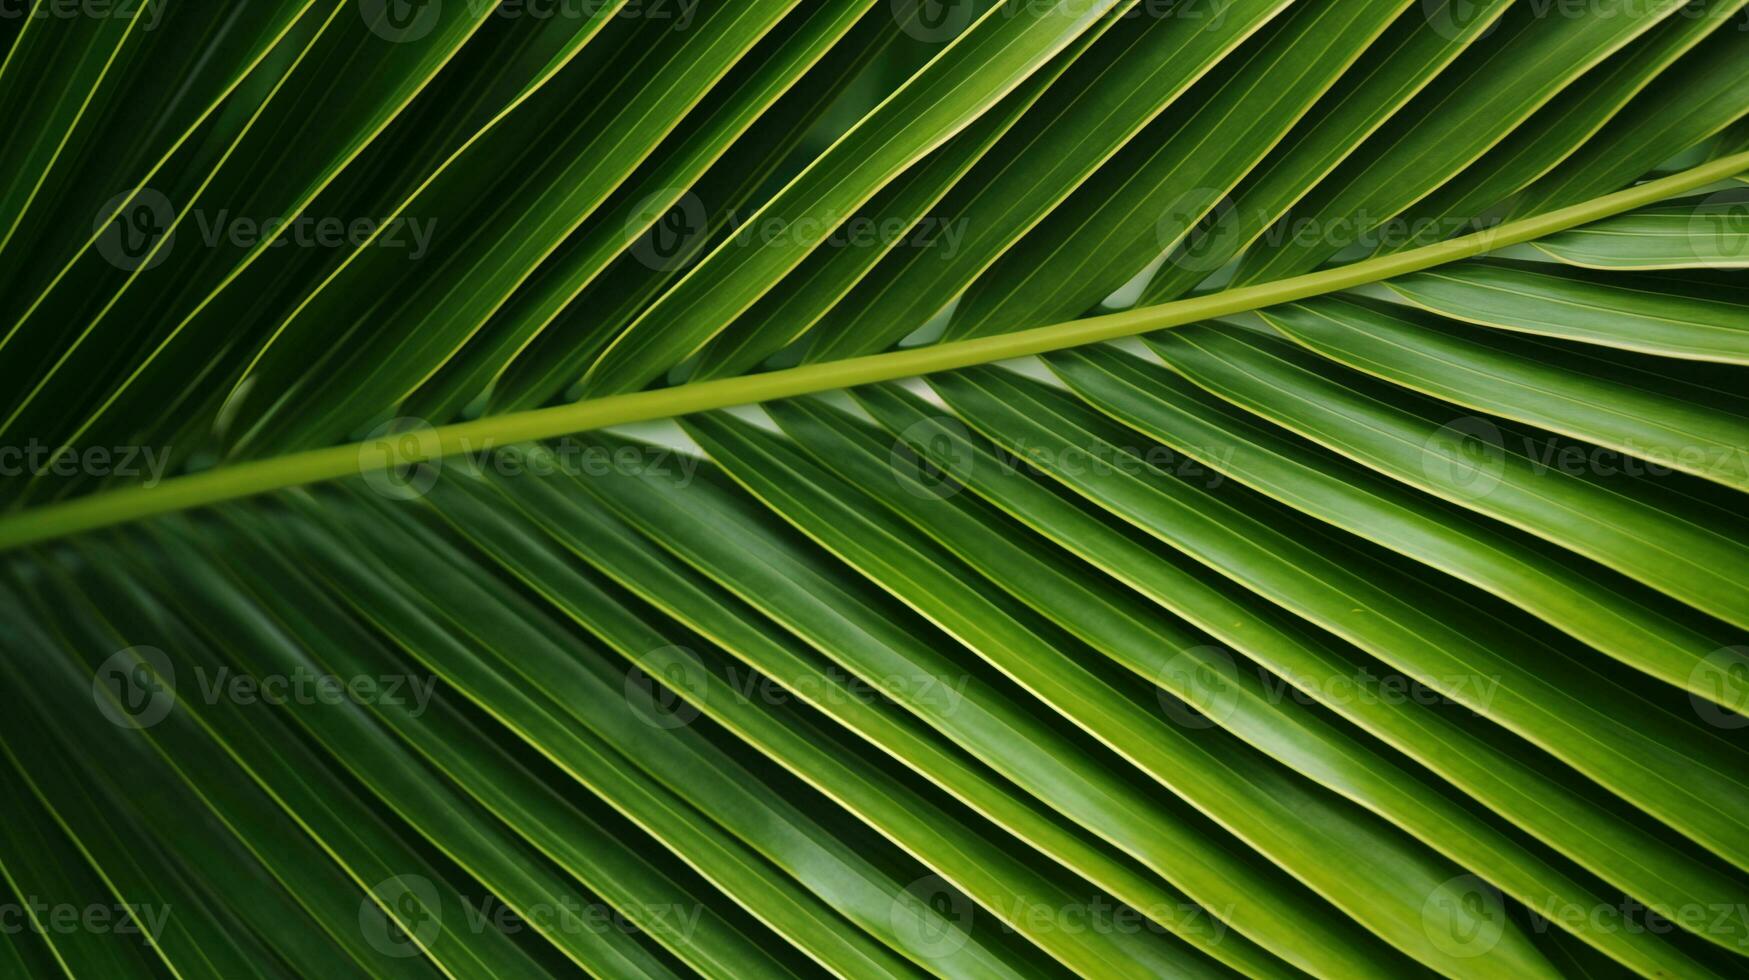 AI generated a close up image of coconut tree leaf photo